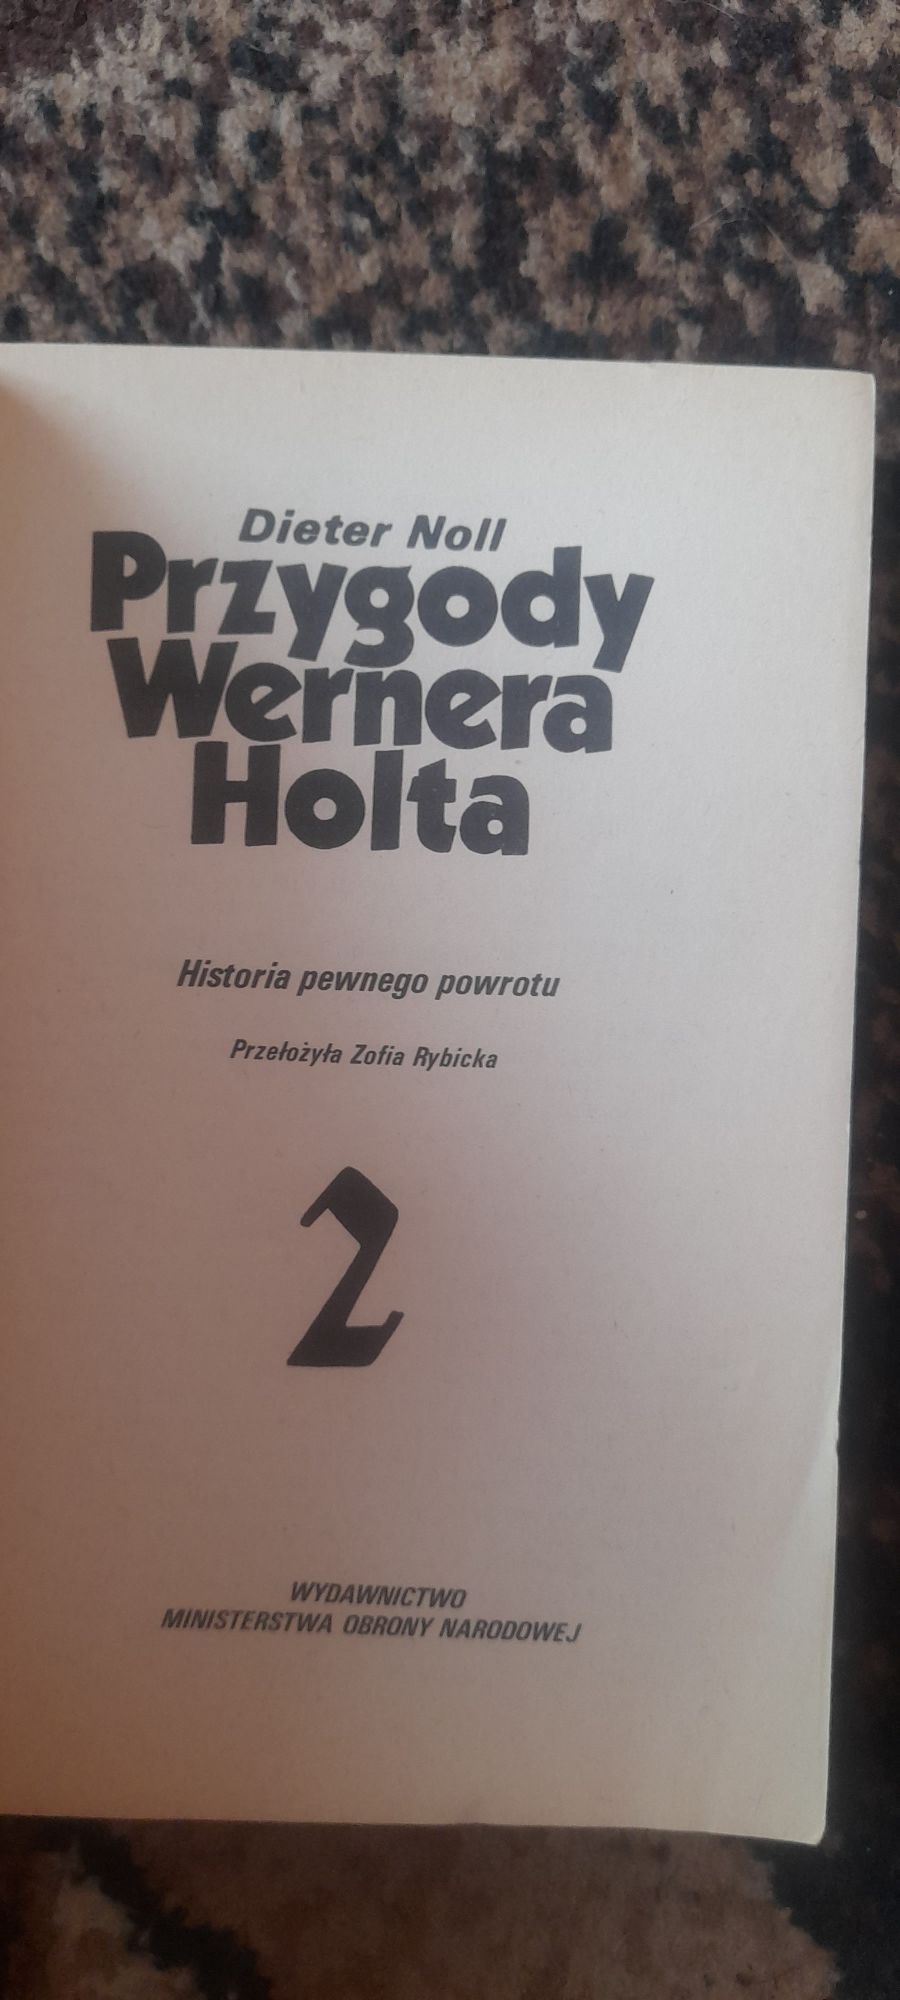 Przygody Wernera Holta cz 2 - Dieter Noll wyd VI 1987